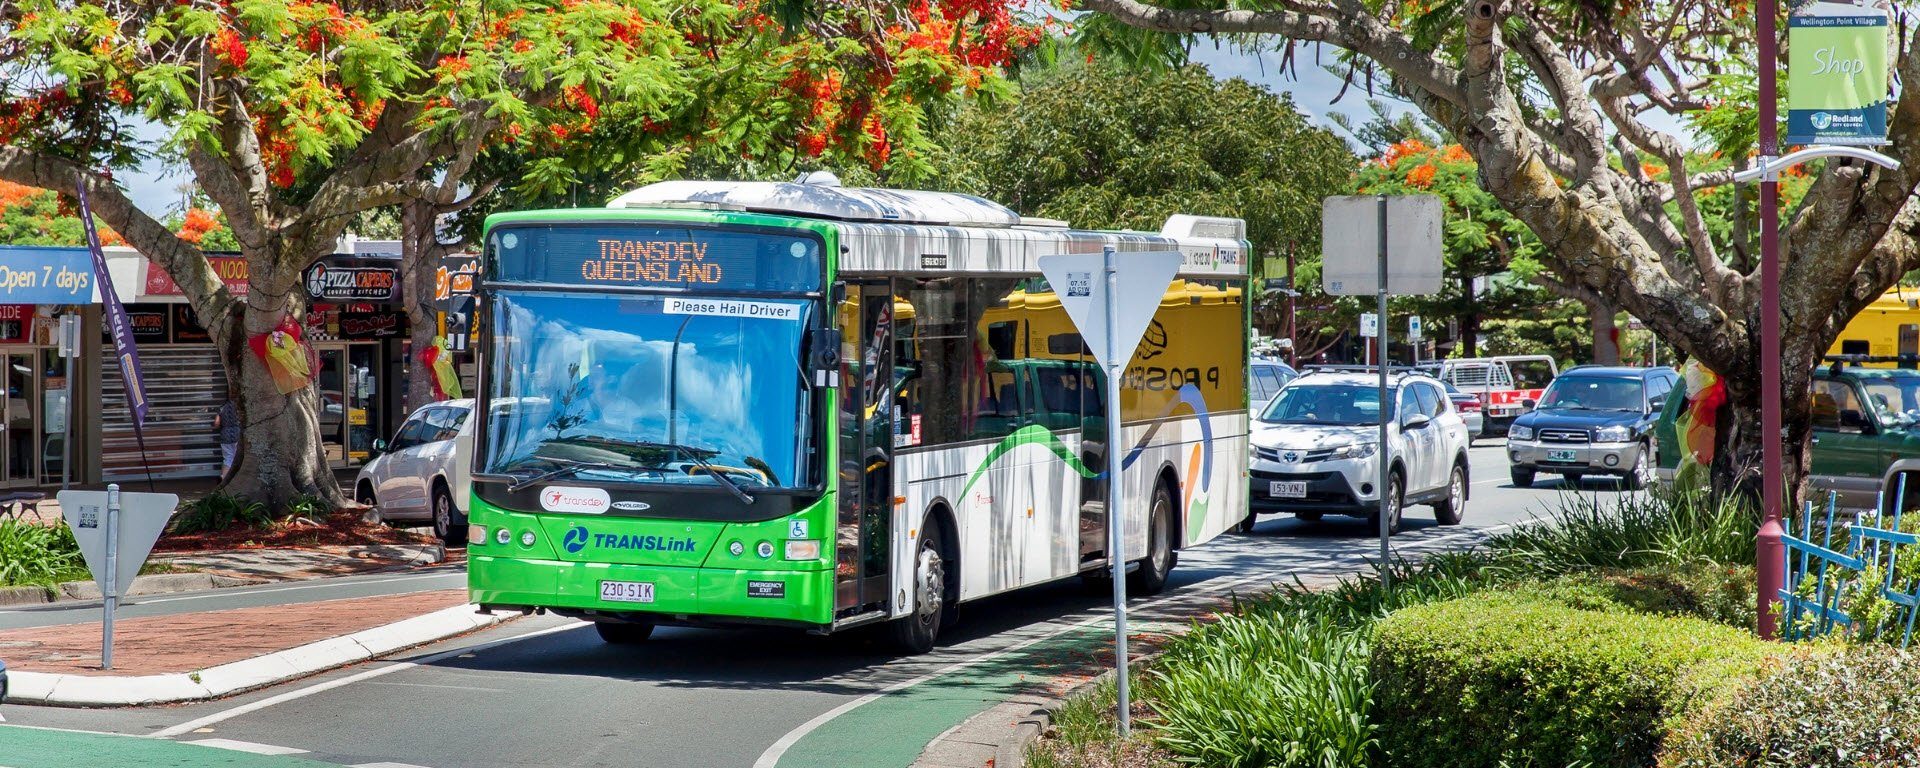 Transdev brisbane bus queensland australasia